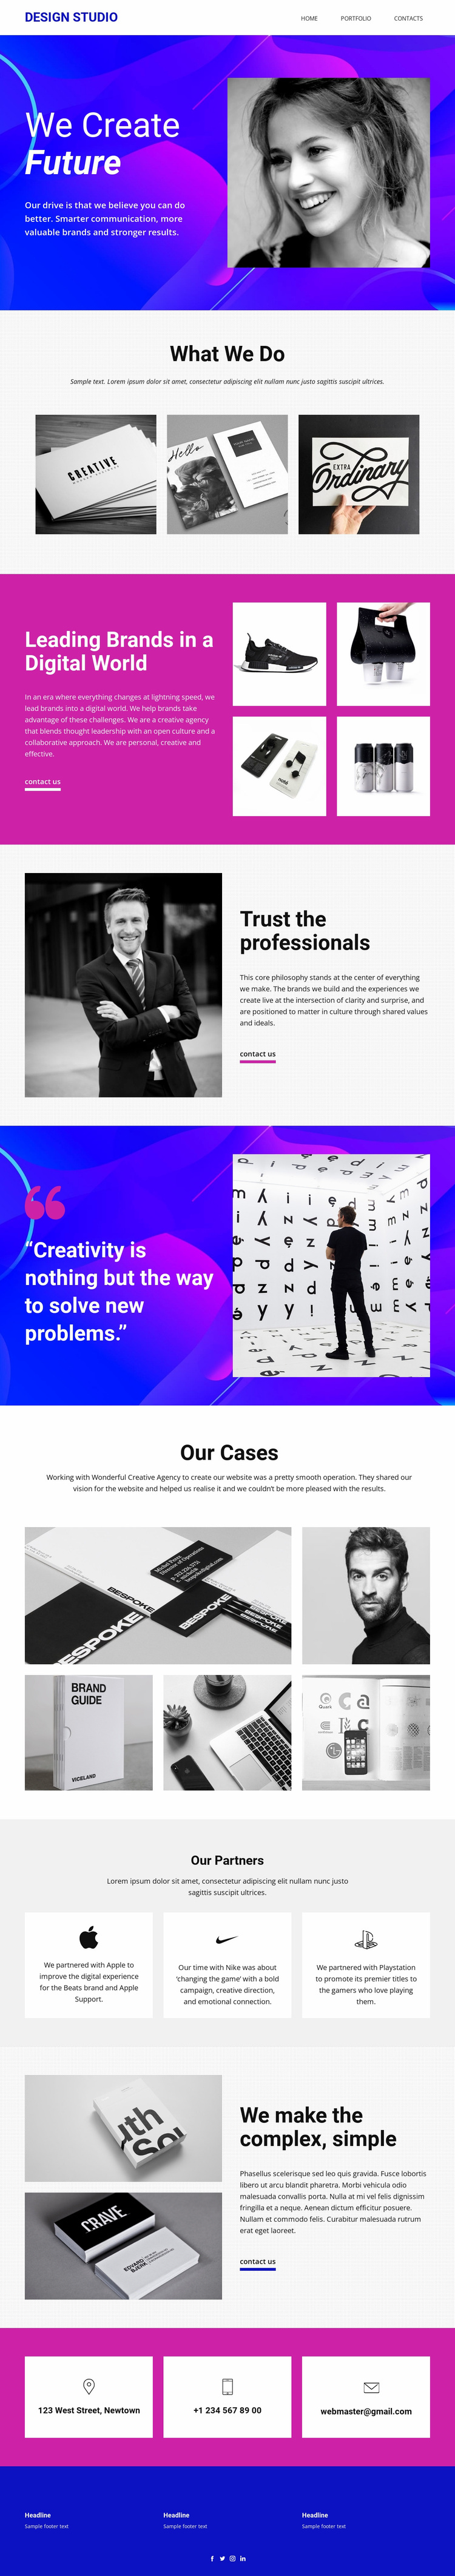 We develop the brand’s core Website Design